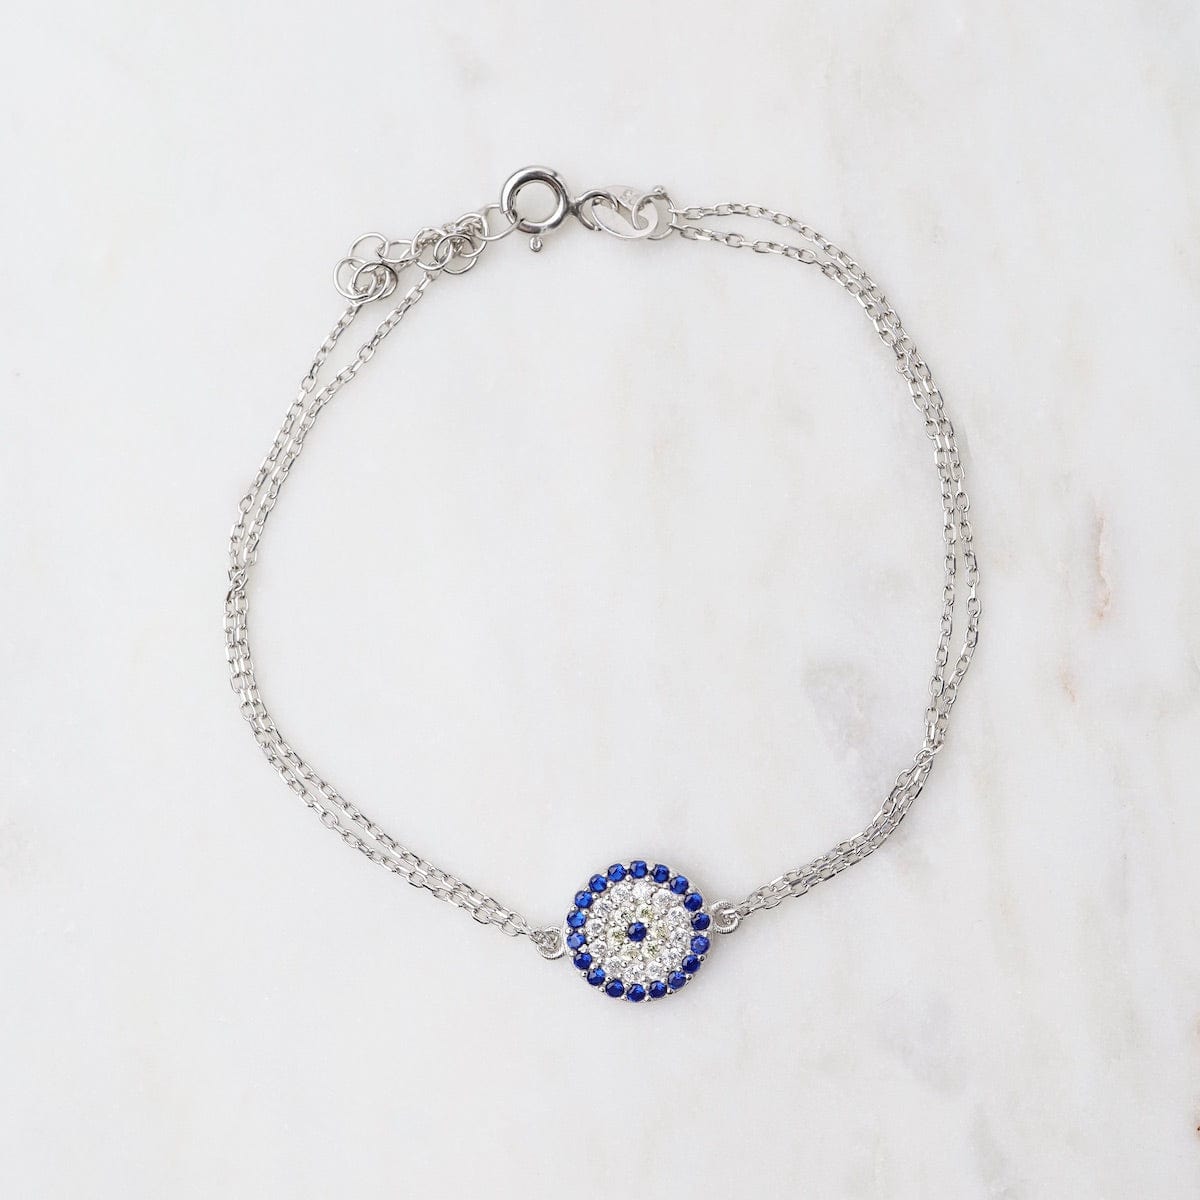 You Are Sunshine - Stretchy Grey Crystal Bracelet – Dandelion Jewelry